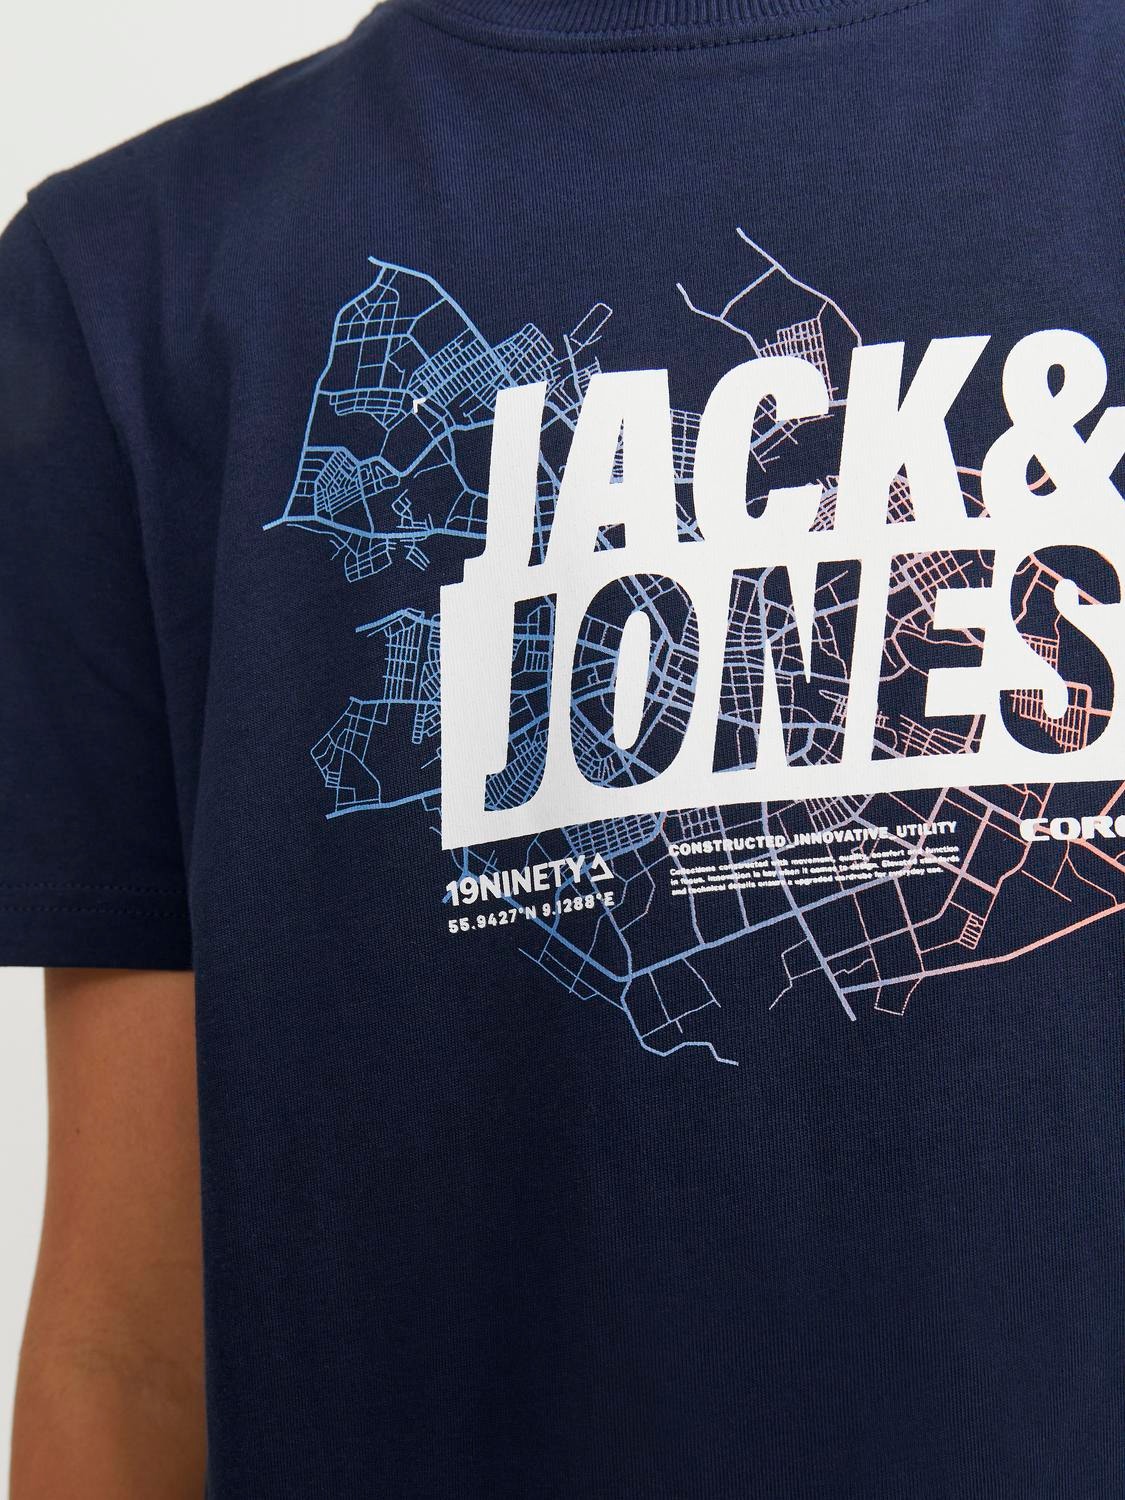 Jack & Jones Printed T-shirt For boys -Navy Blazer - 12254186